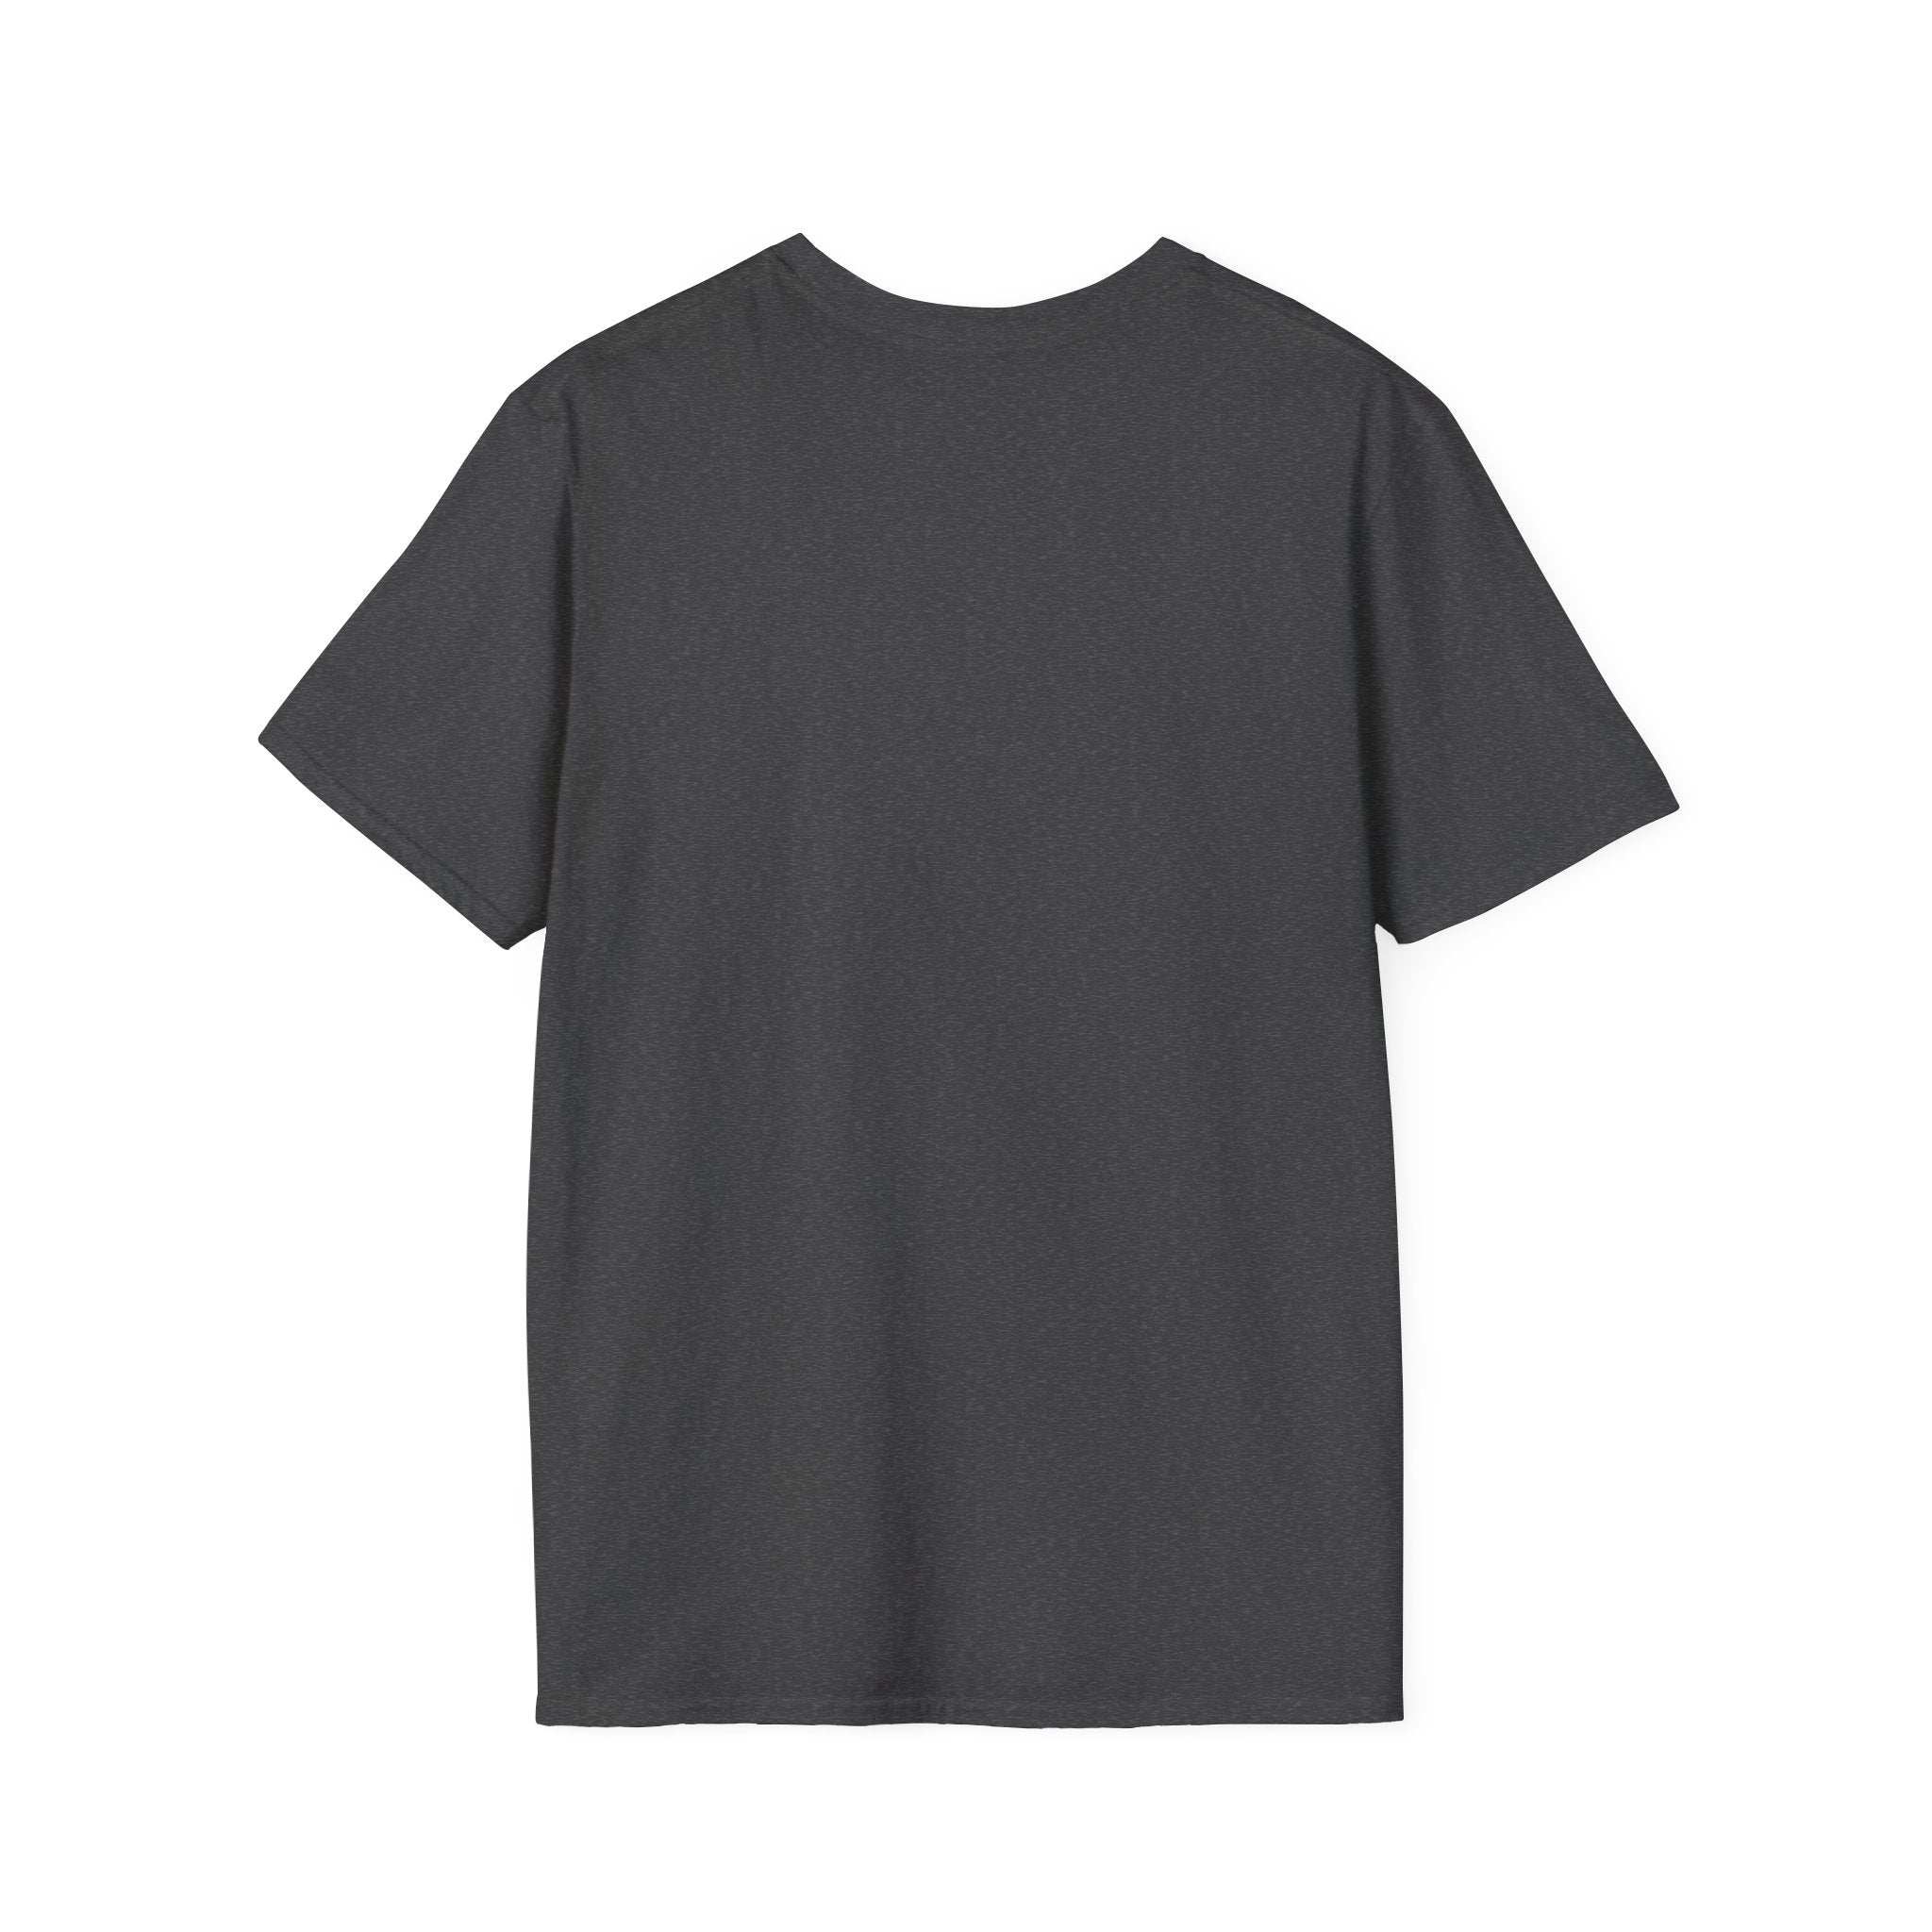 dark grey t shirt by bold by design